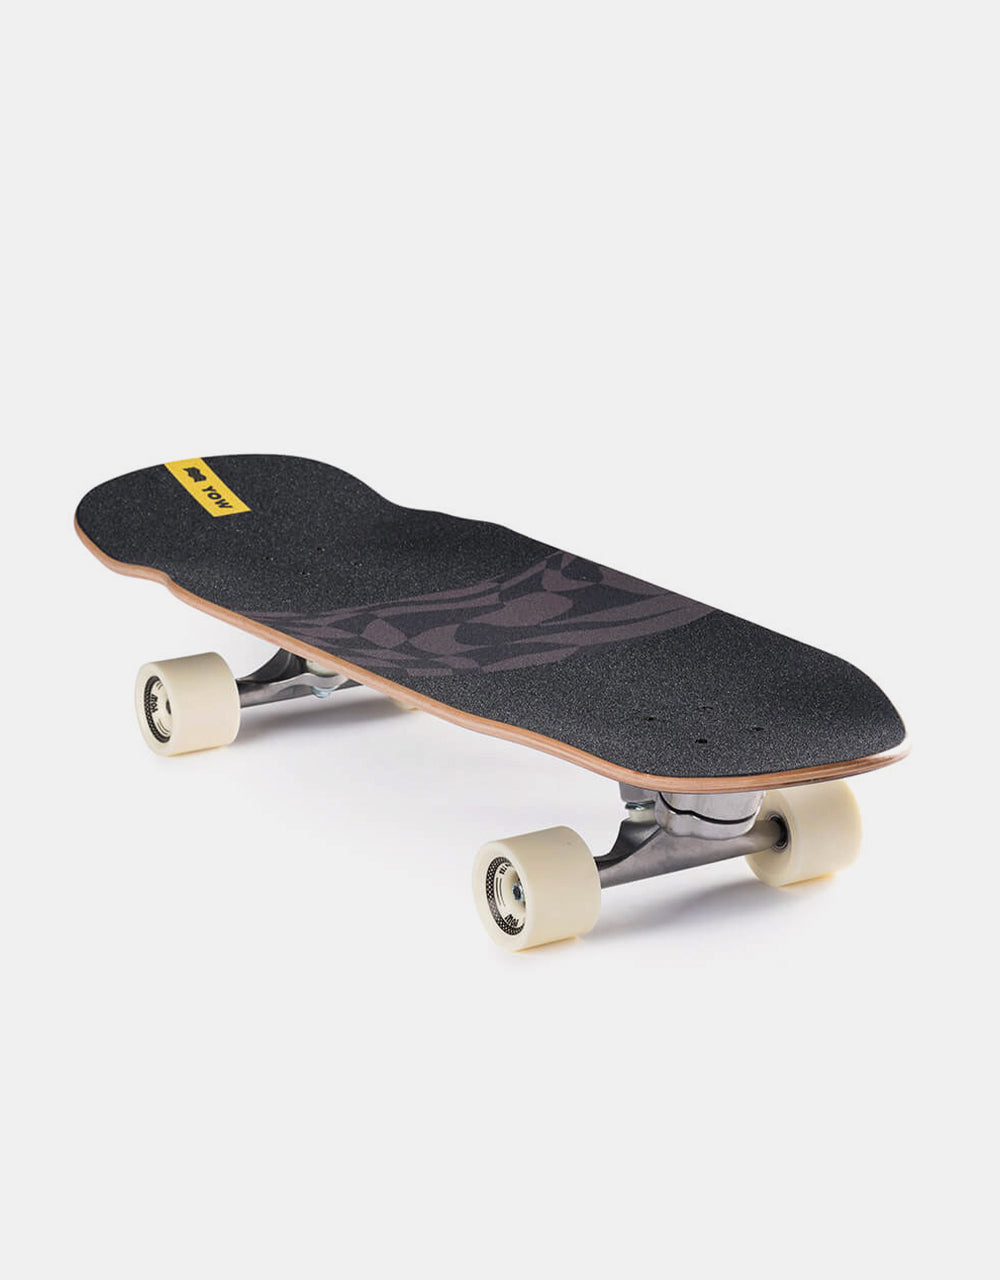 YOW Arica SurfSkate Cruiser Skateboard - 10.5" x 33"